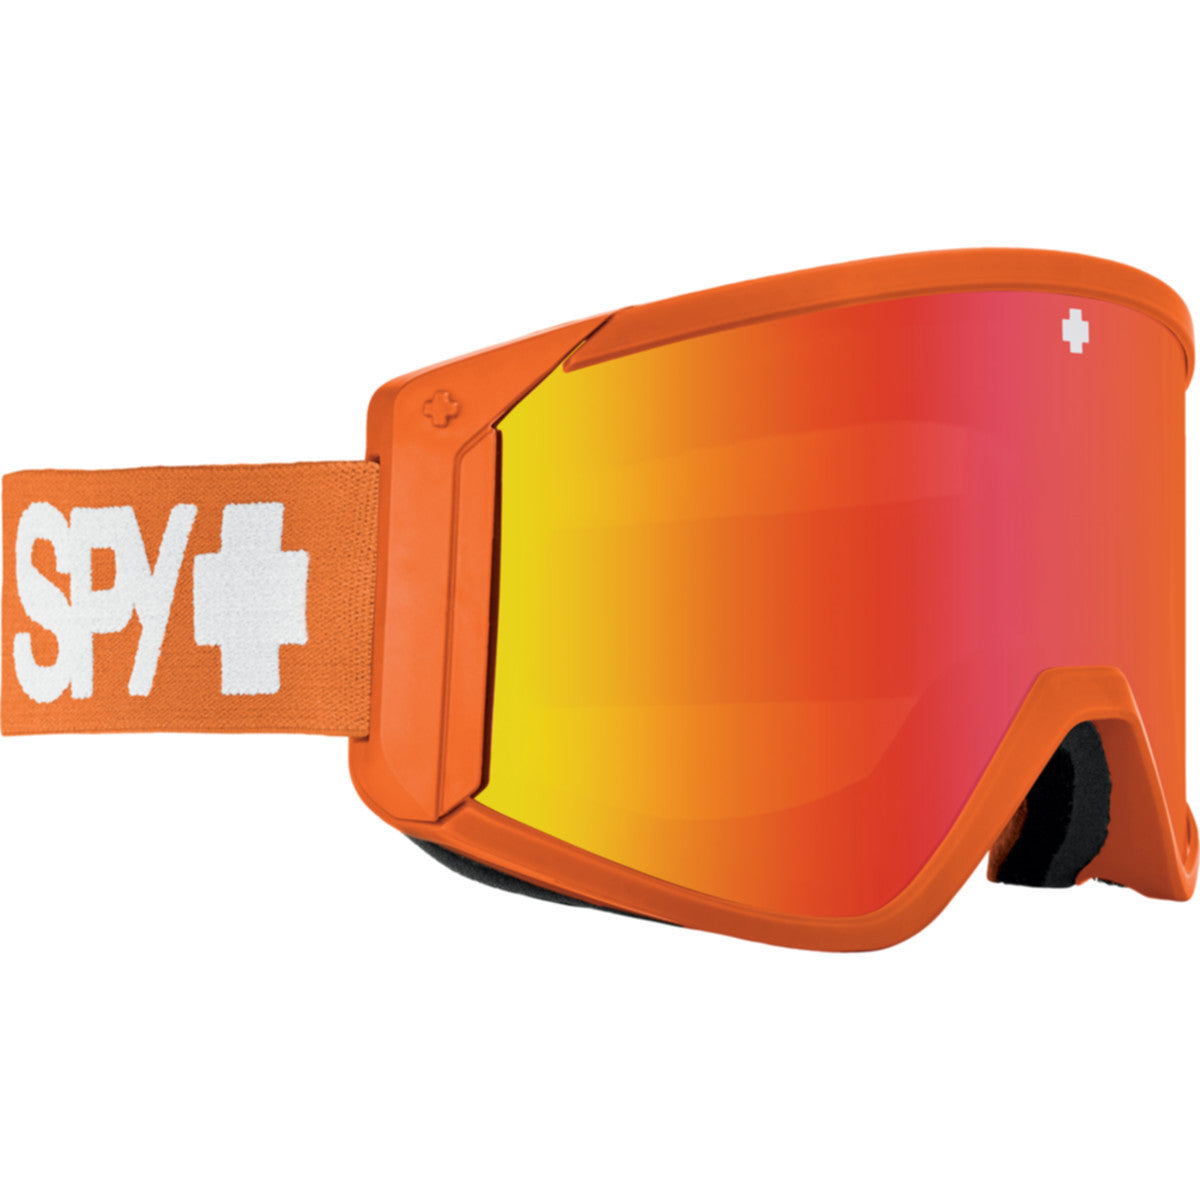 Spy Raider Goggles  Gloss Orange One size